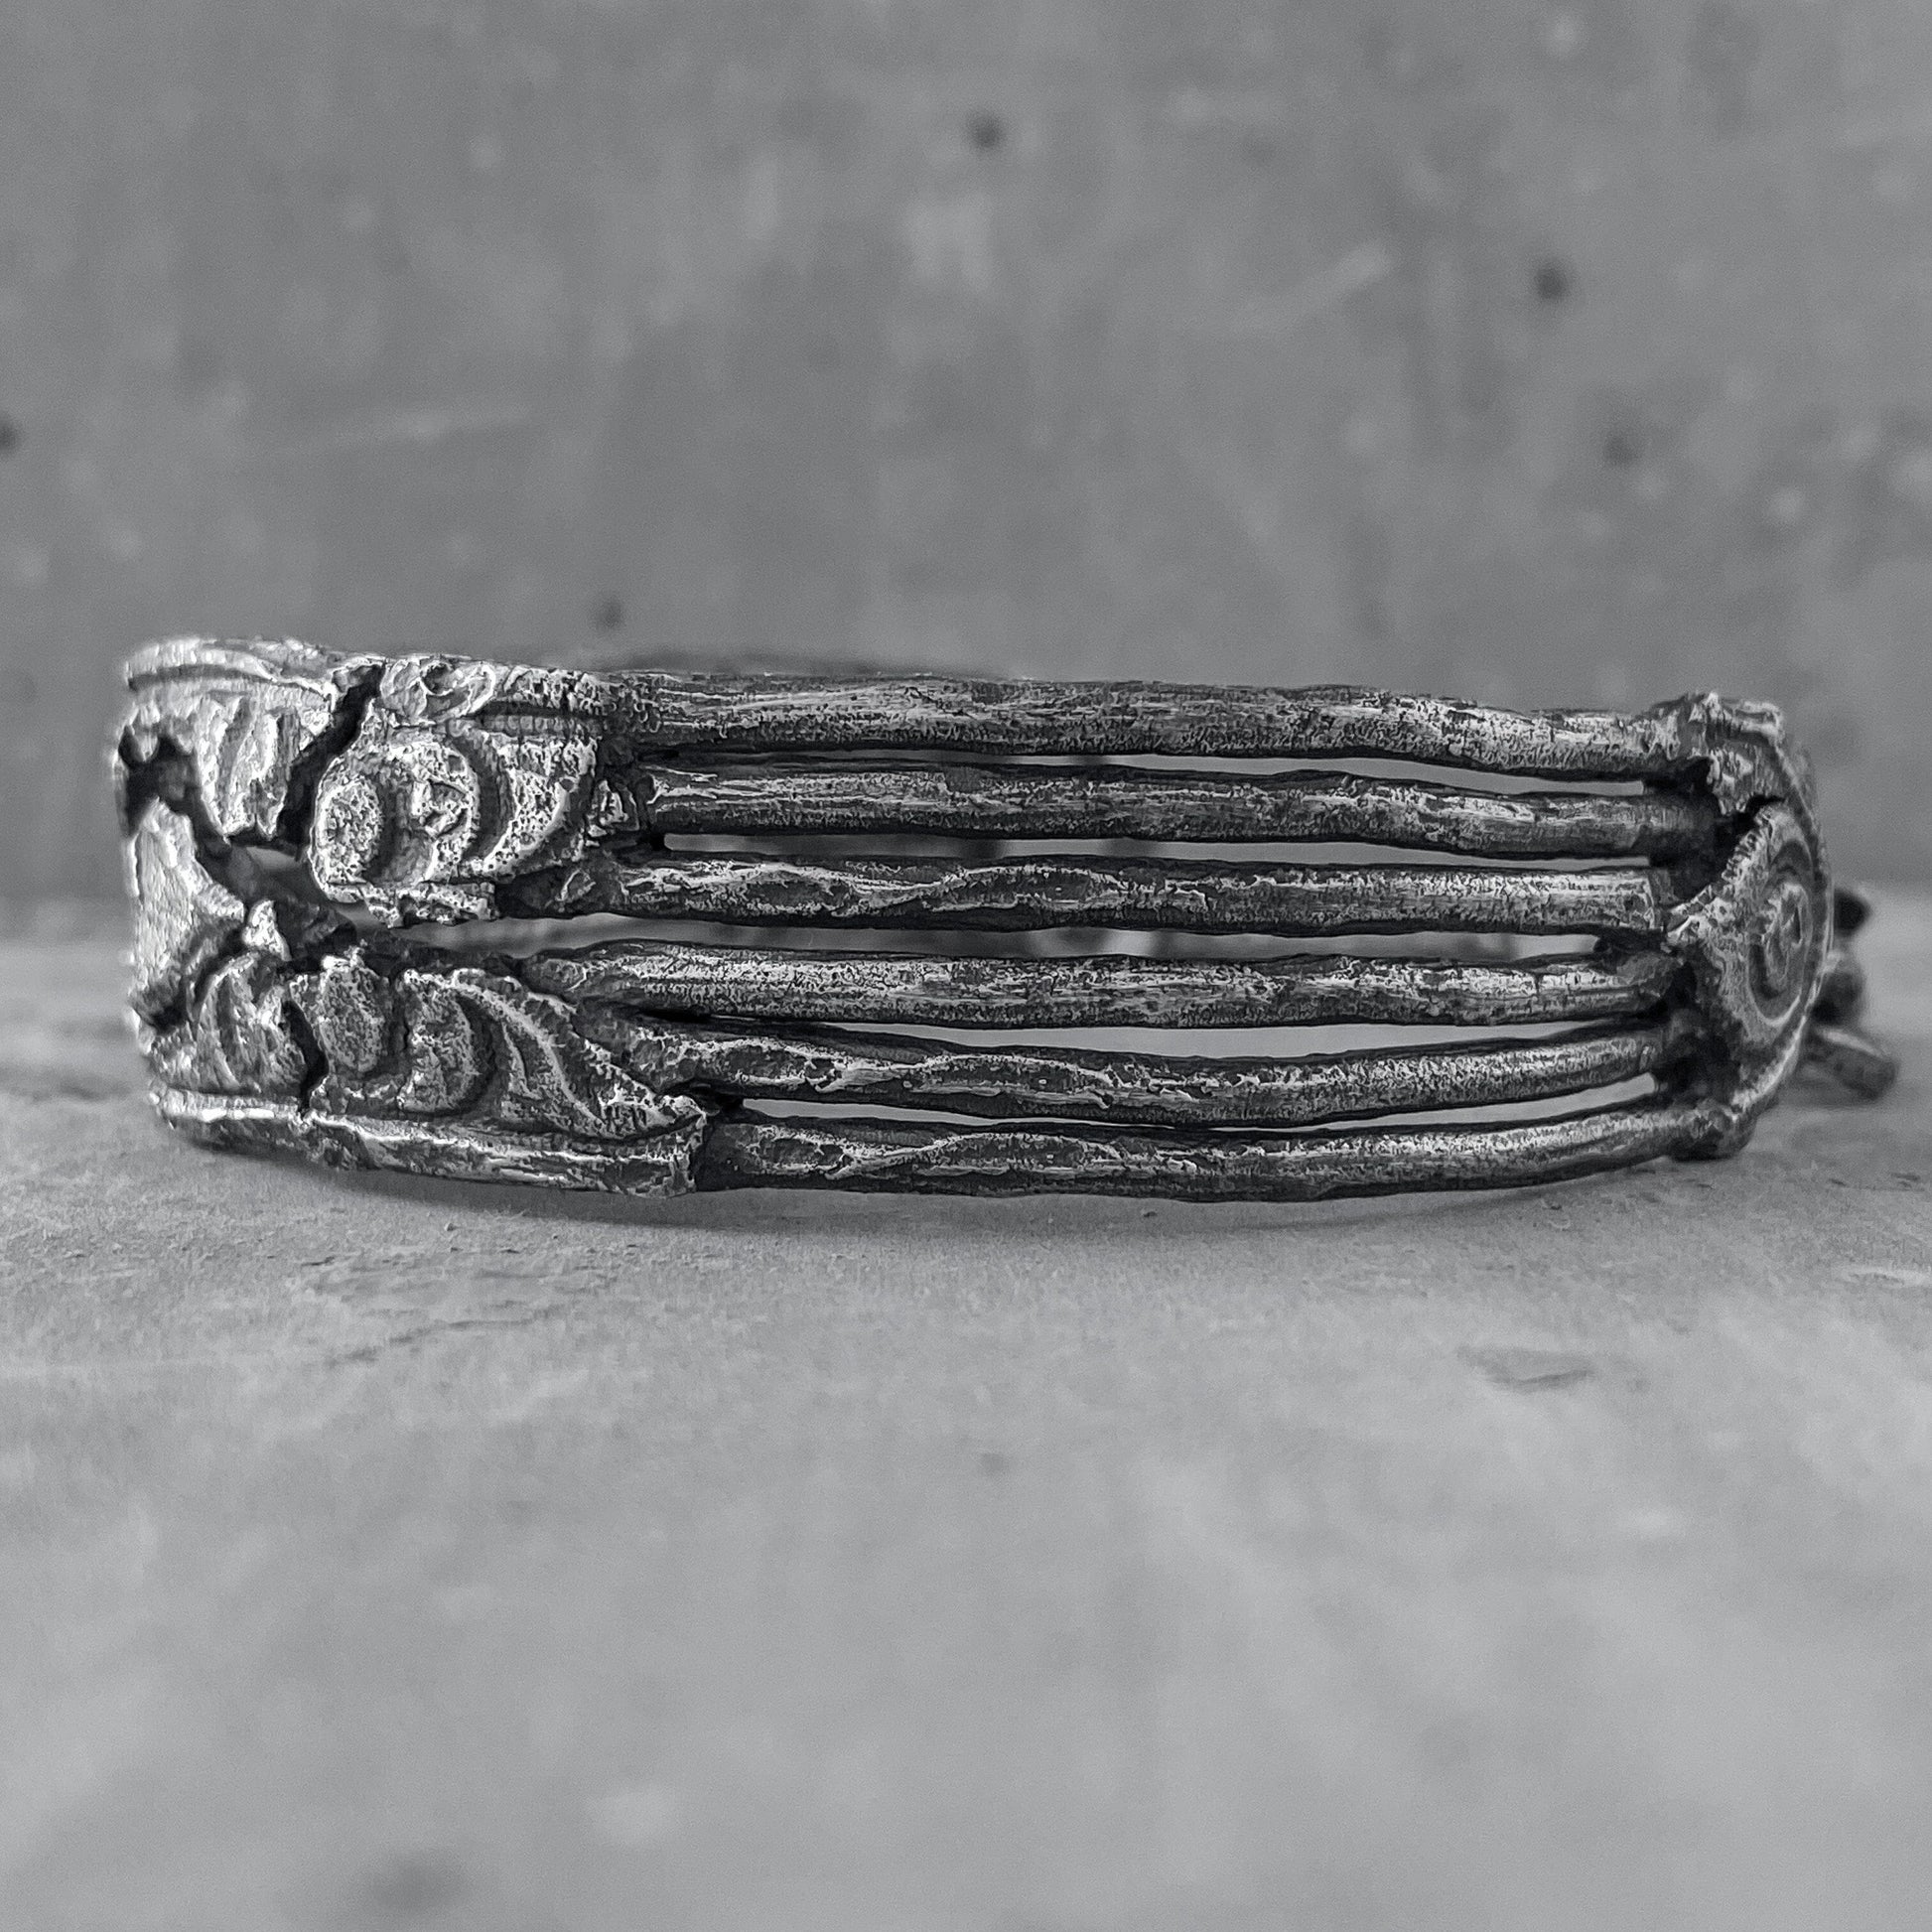 Tethys bracelet- combined ruinistic bracelet with ancient elements, patterns and cracks Bracelets Project50g 